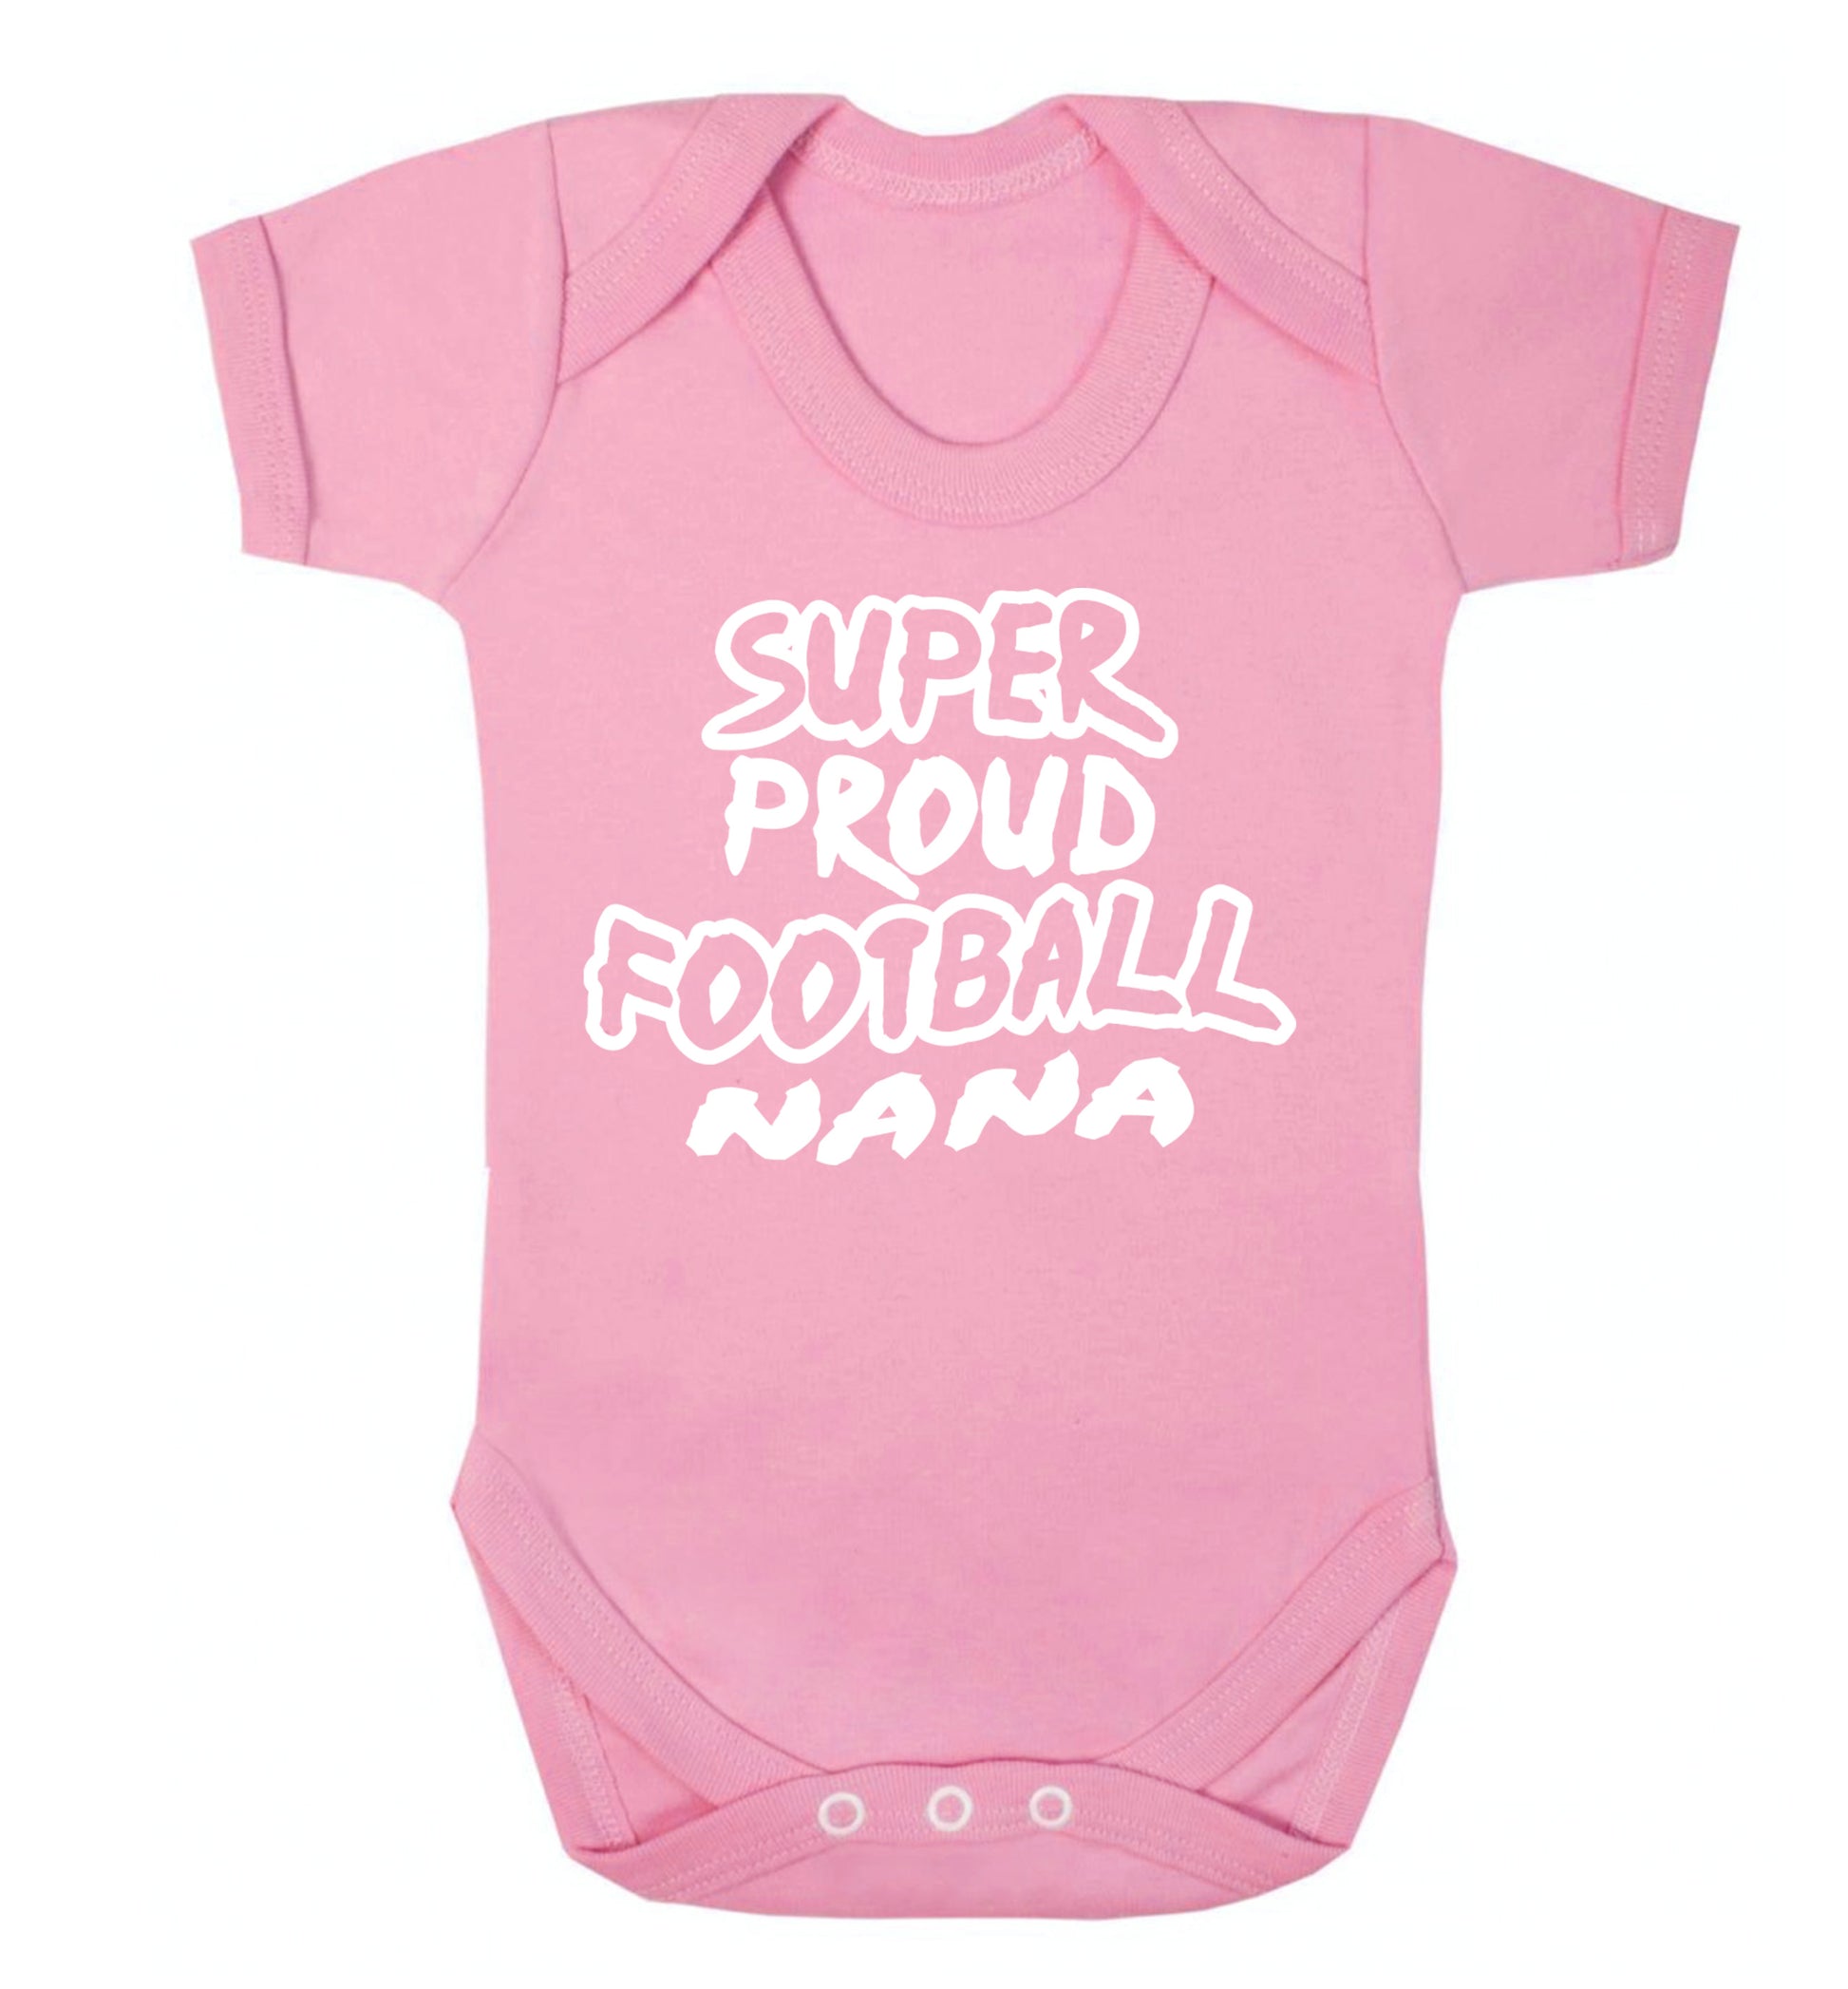 Super proud football nana Baby Vest pale pink 18-24 months